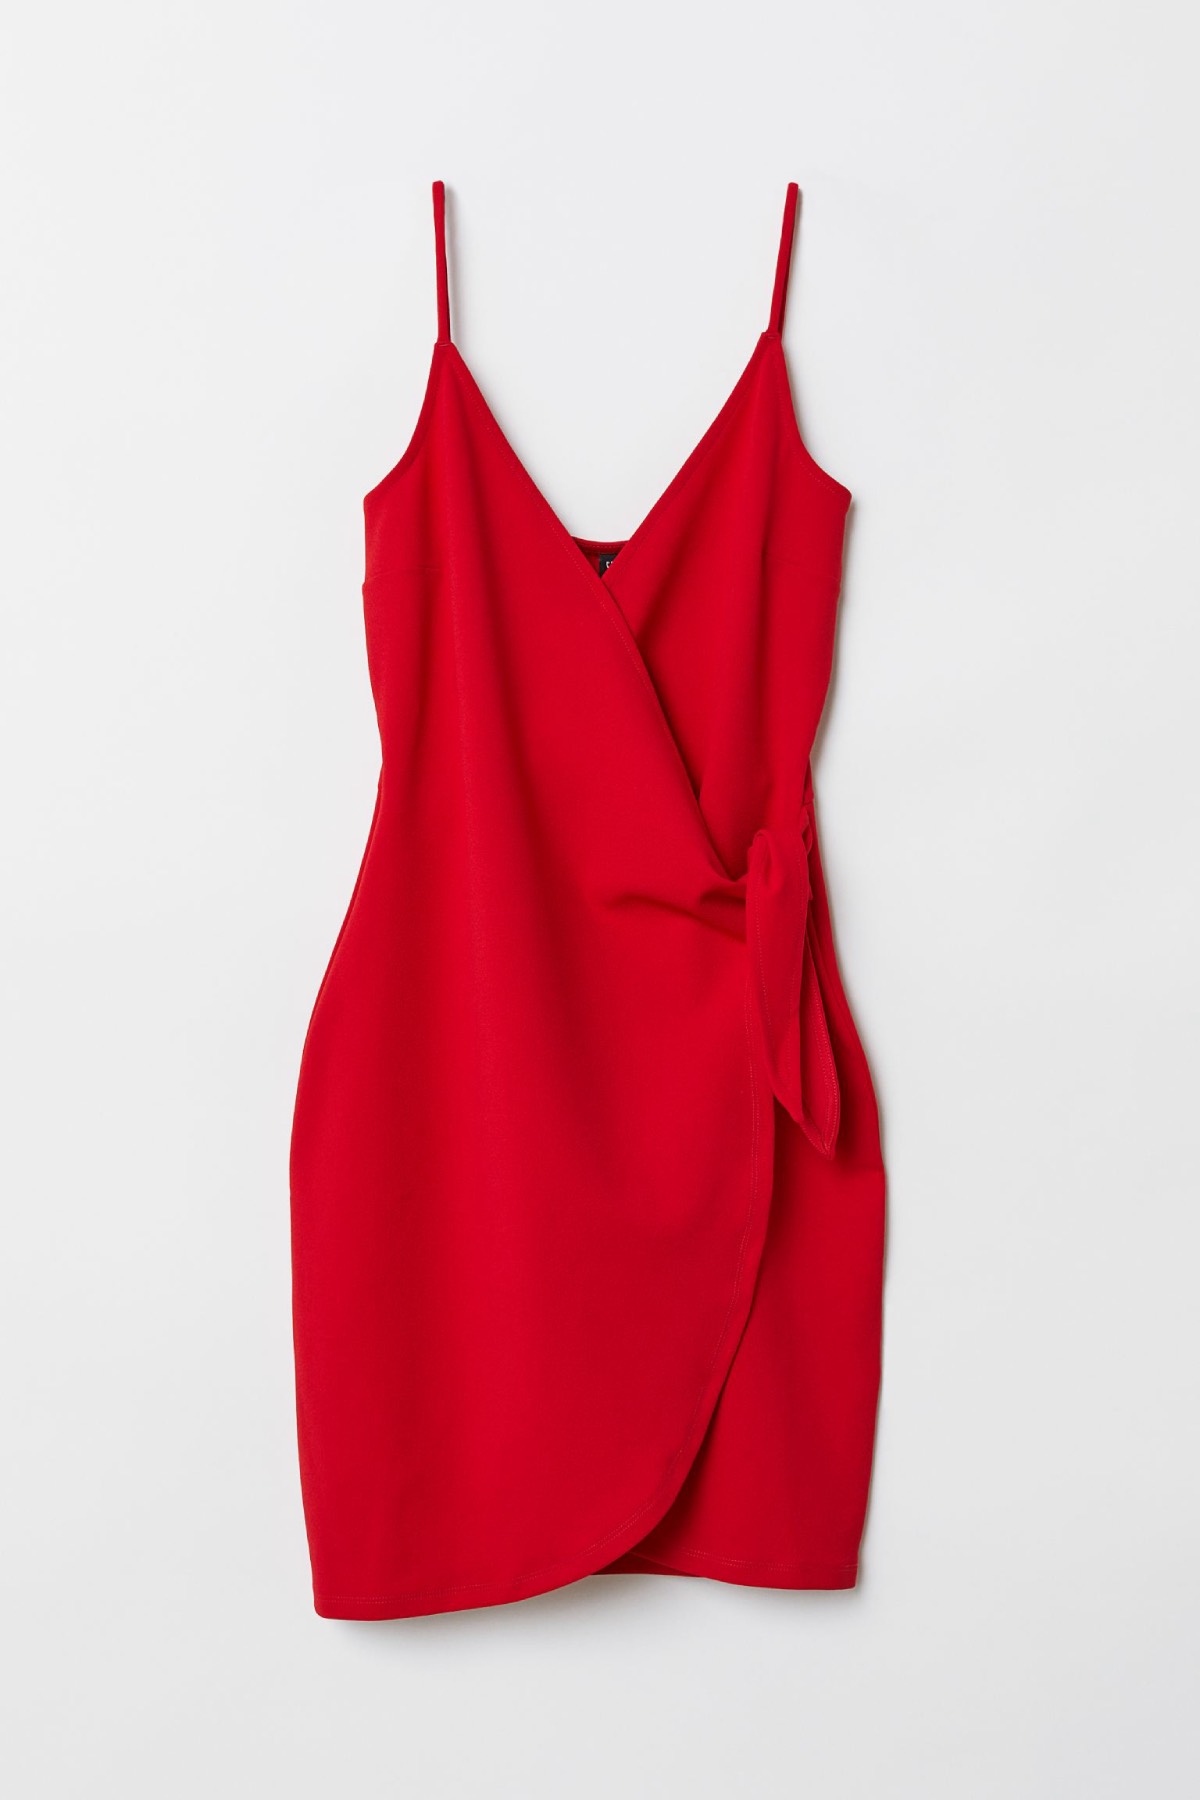 Vestido rojo H&M Ana Soria